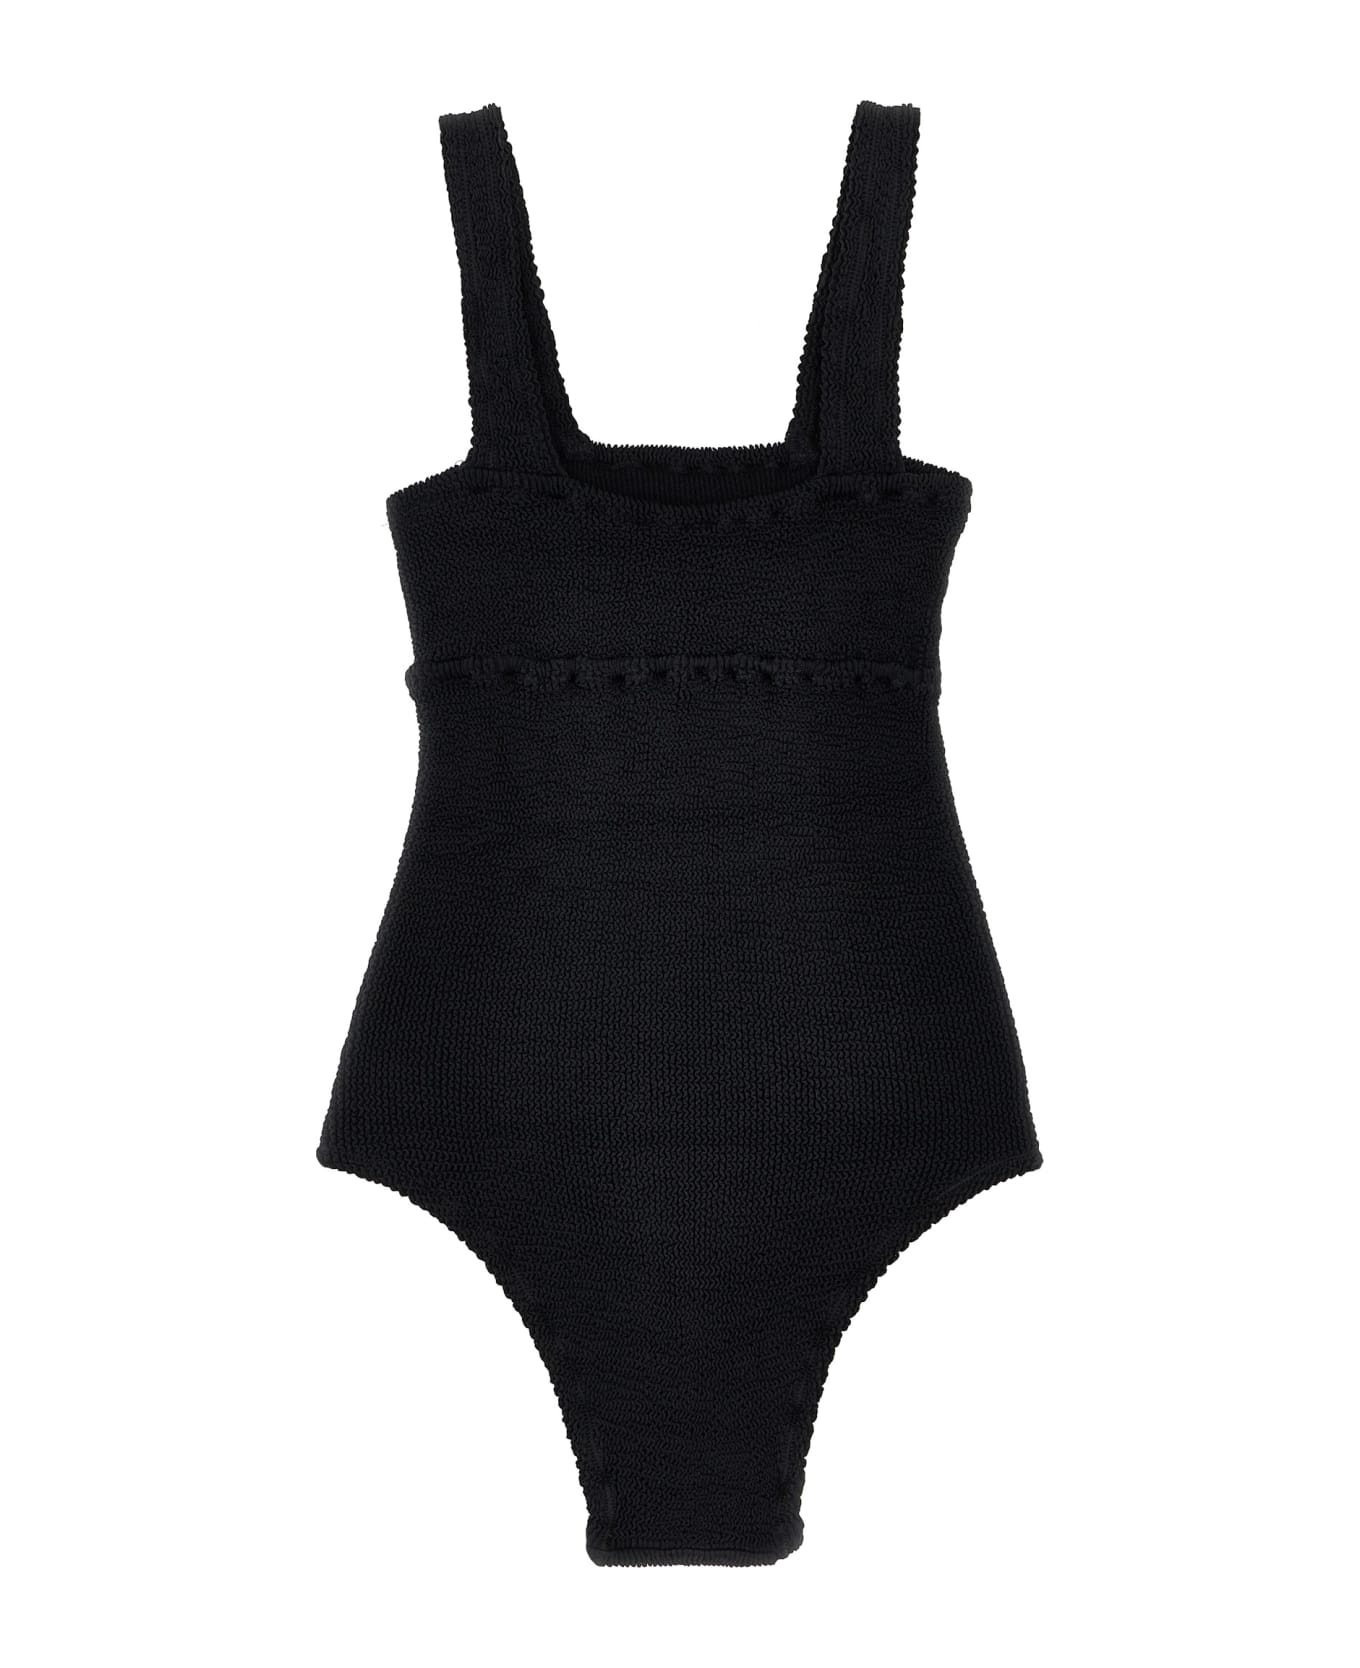 Reina Olga 'lucia' One-piece Swimsuit - Black   水着